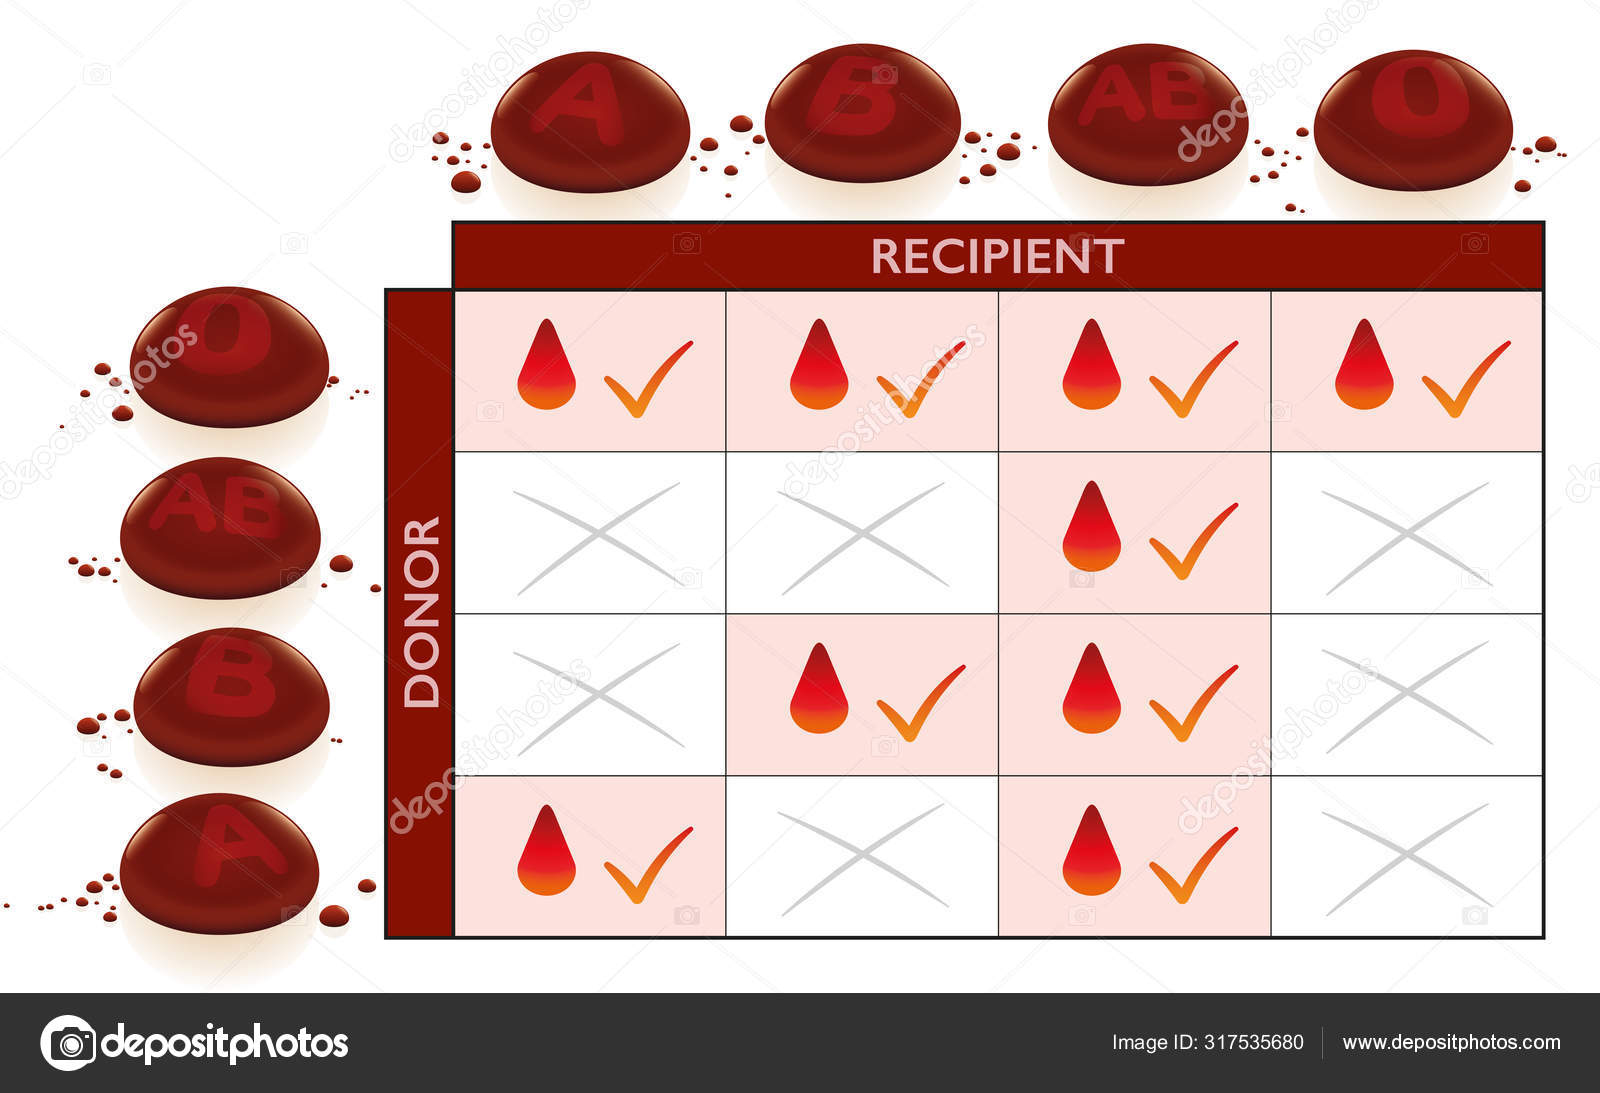 Transfusion Chart